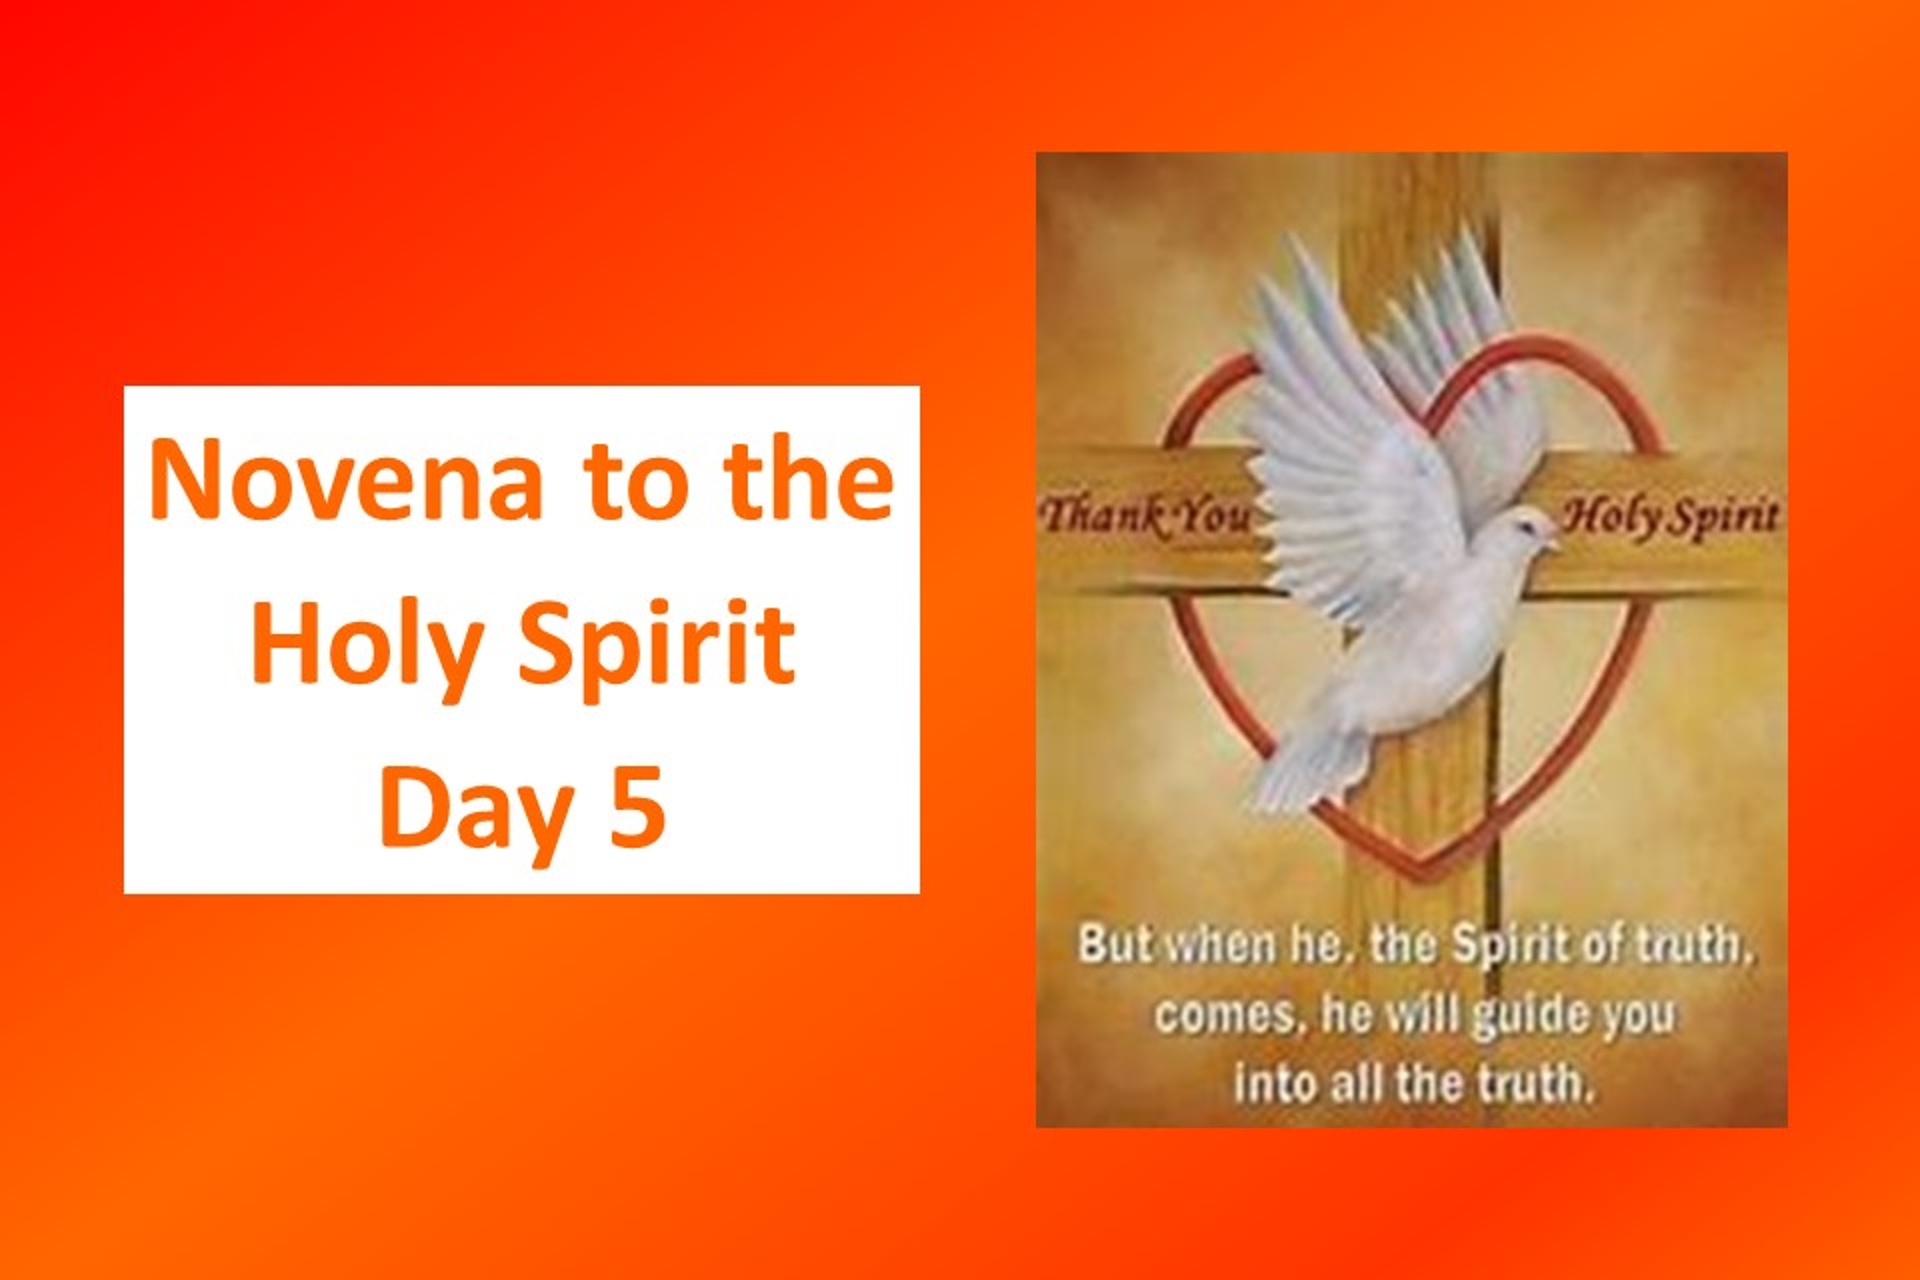 Novena to the Holy Spirit - Day 5